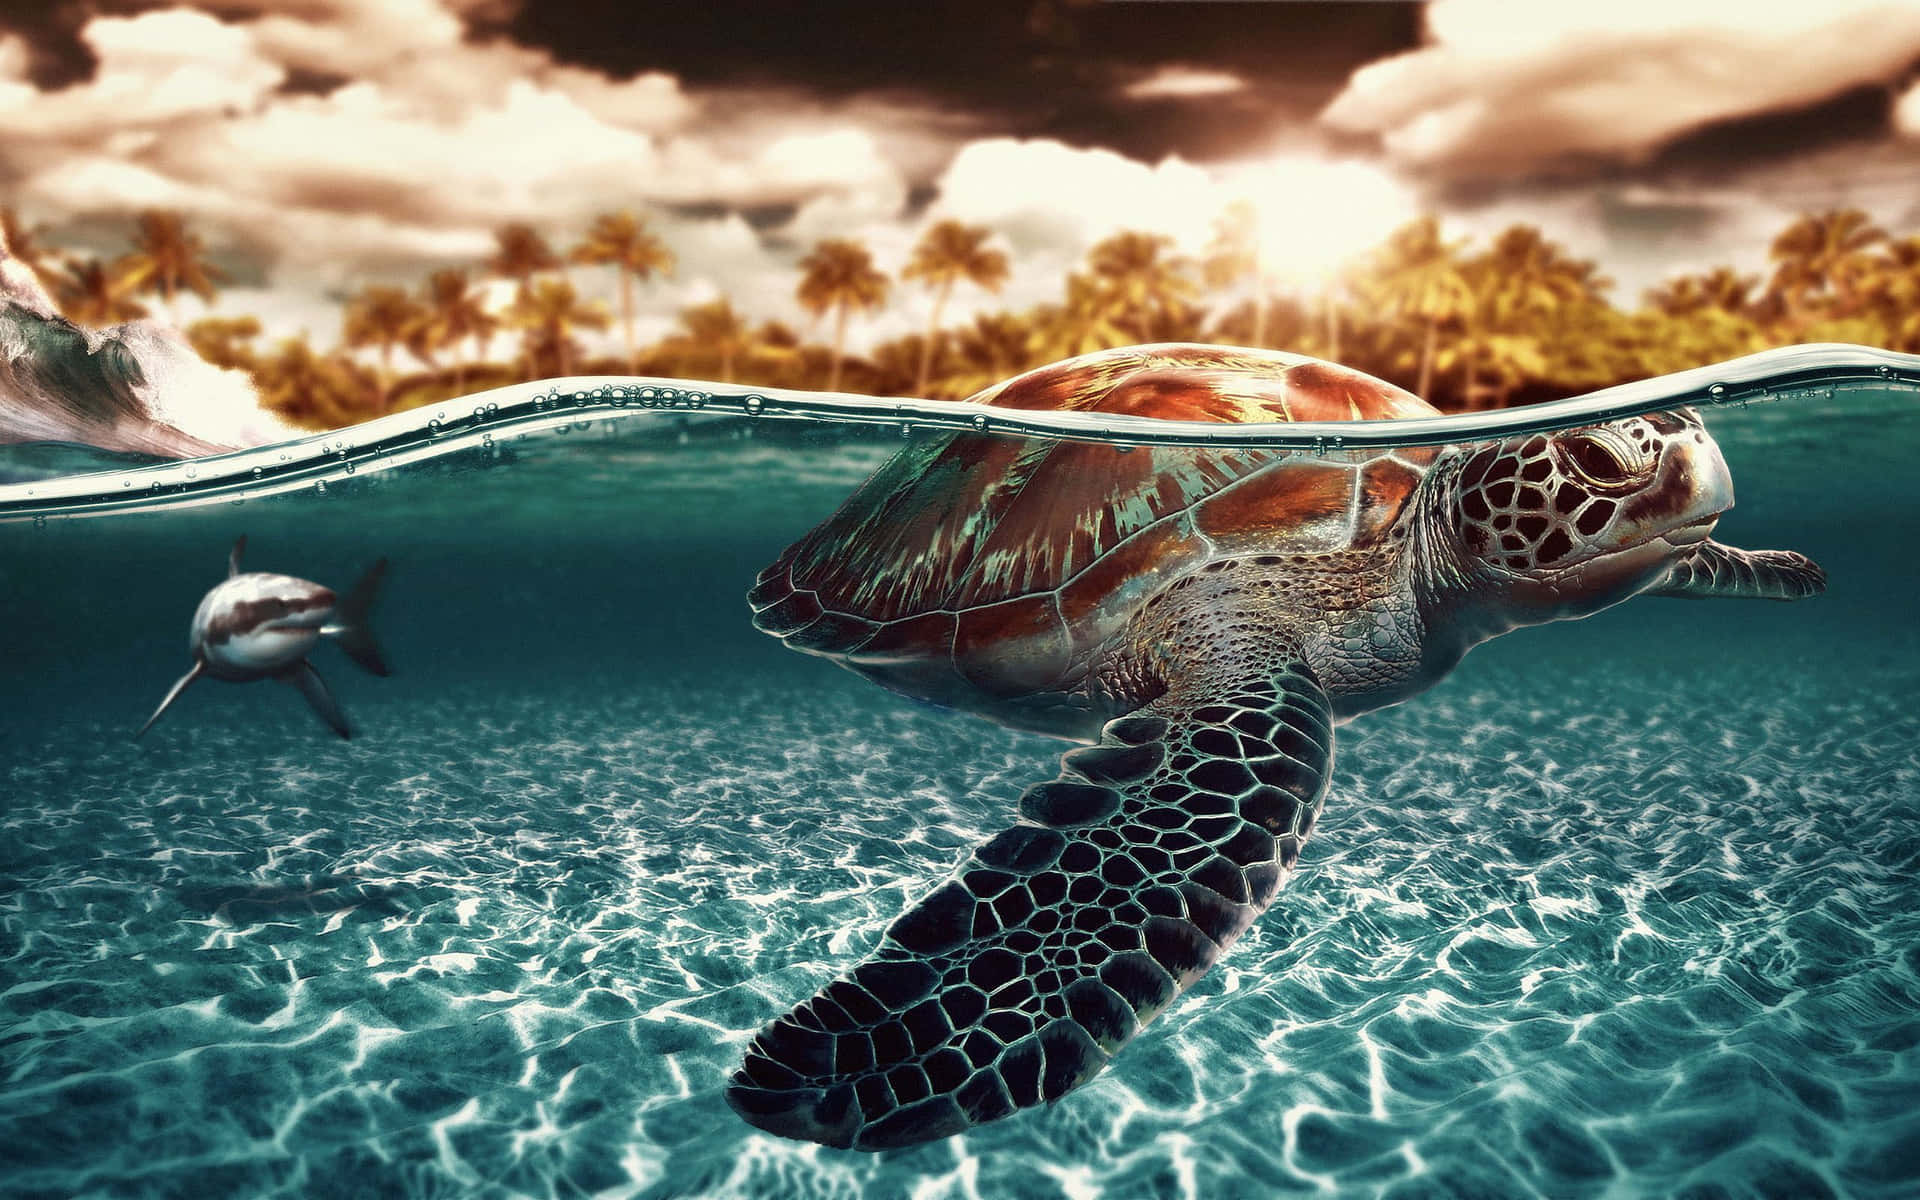 Enskildpadde, Der Svømmer I Havet Sammen Med Delfiner.